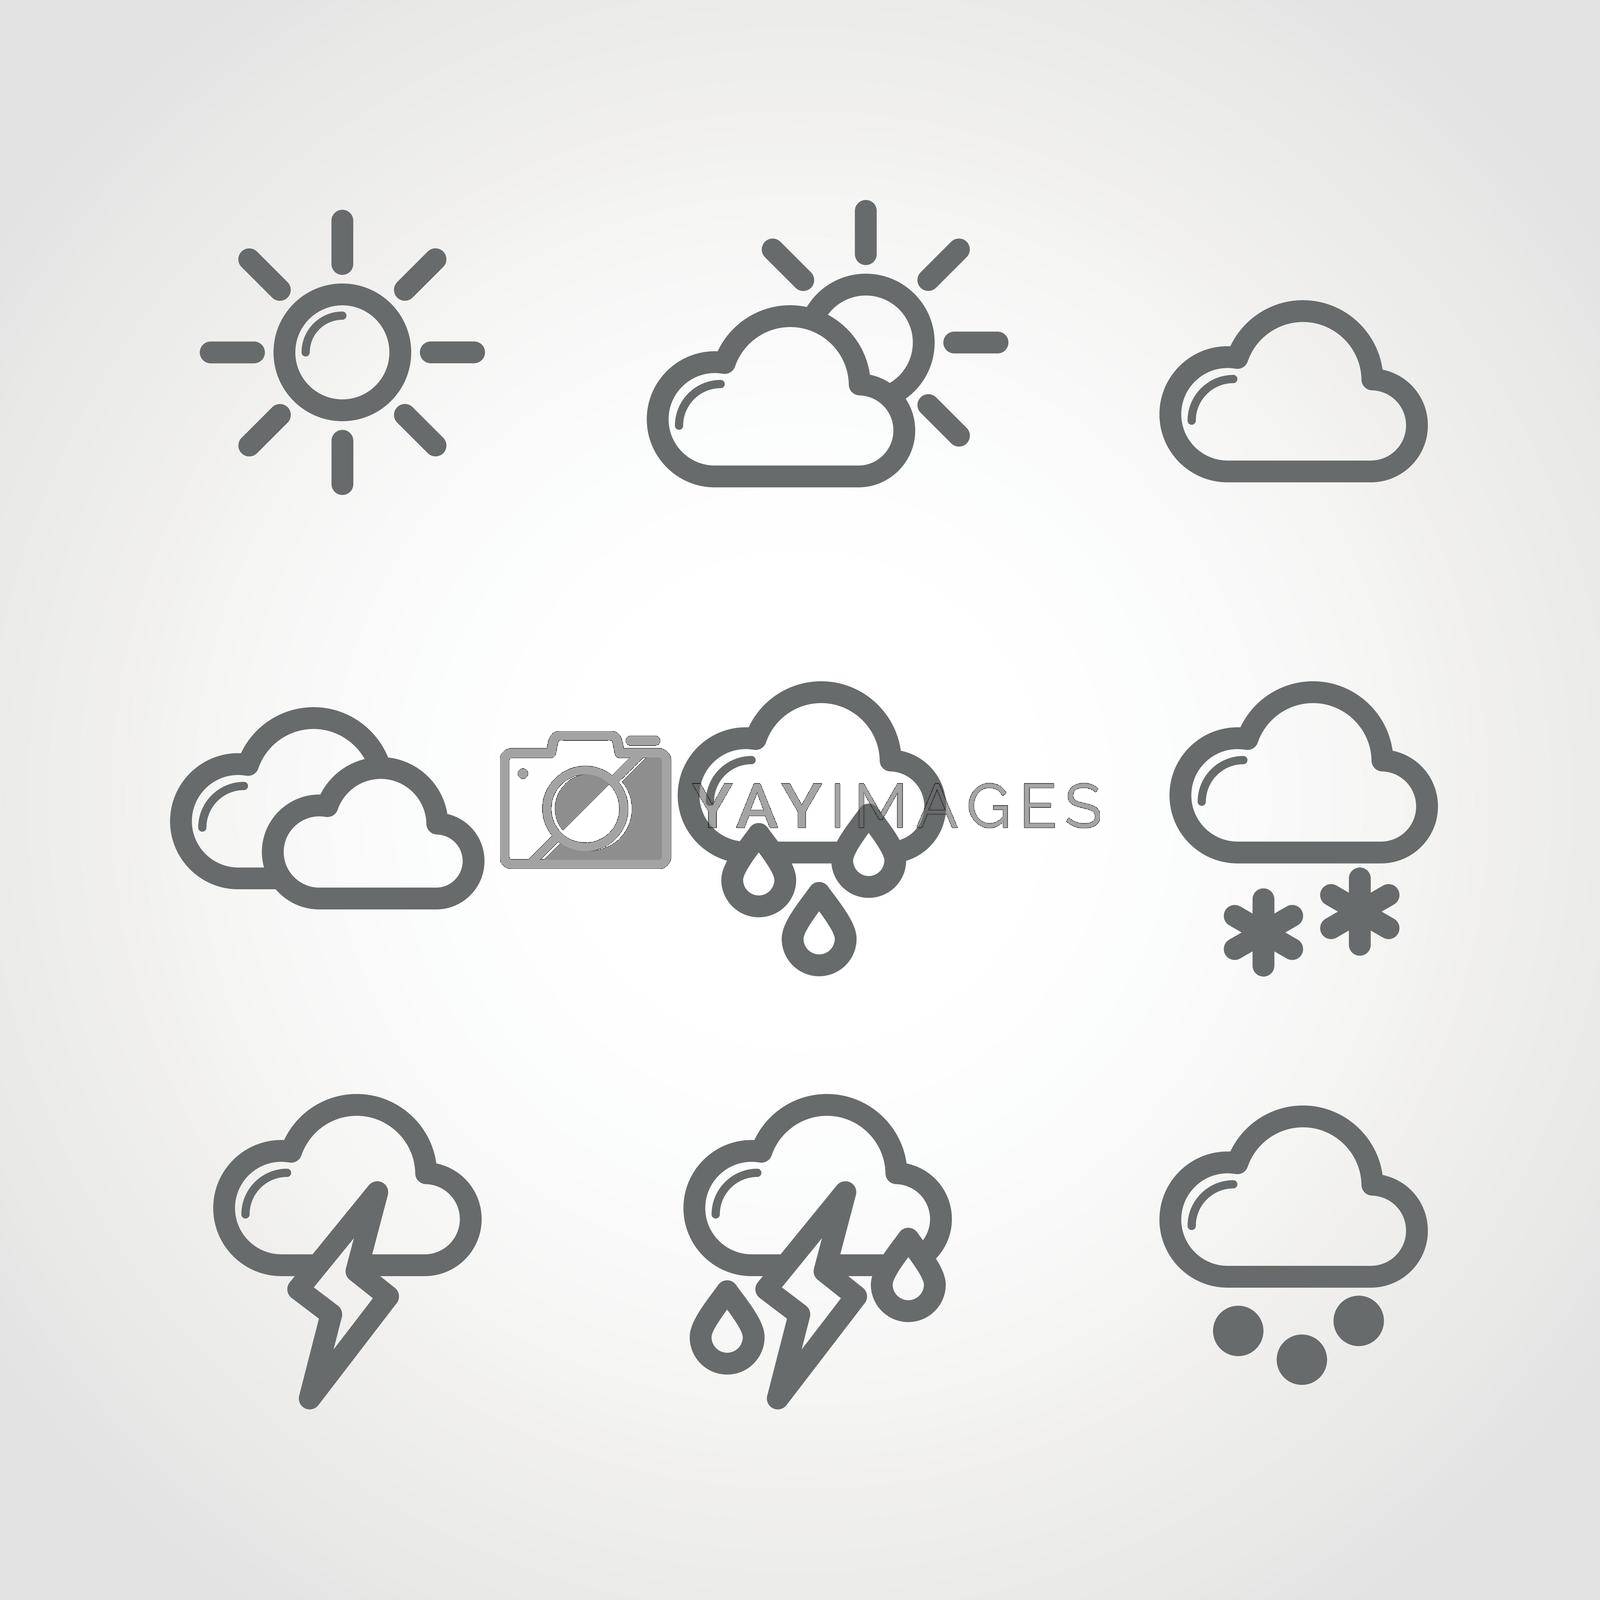 App icon weather vector set eps 10